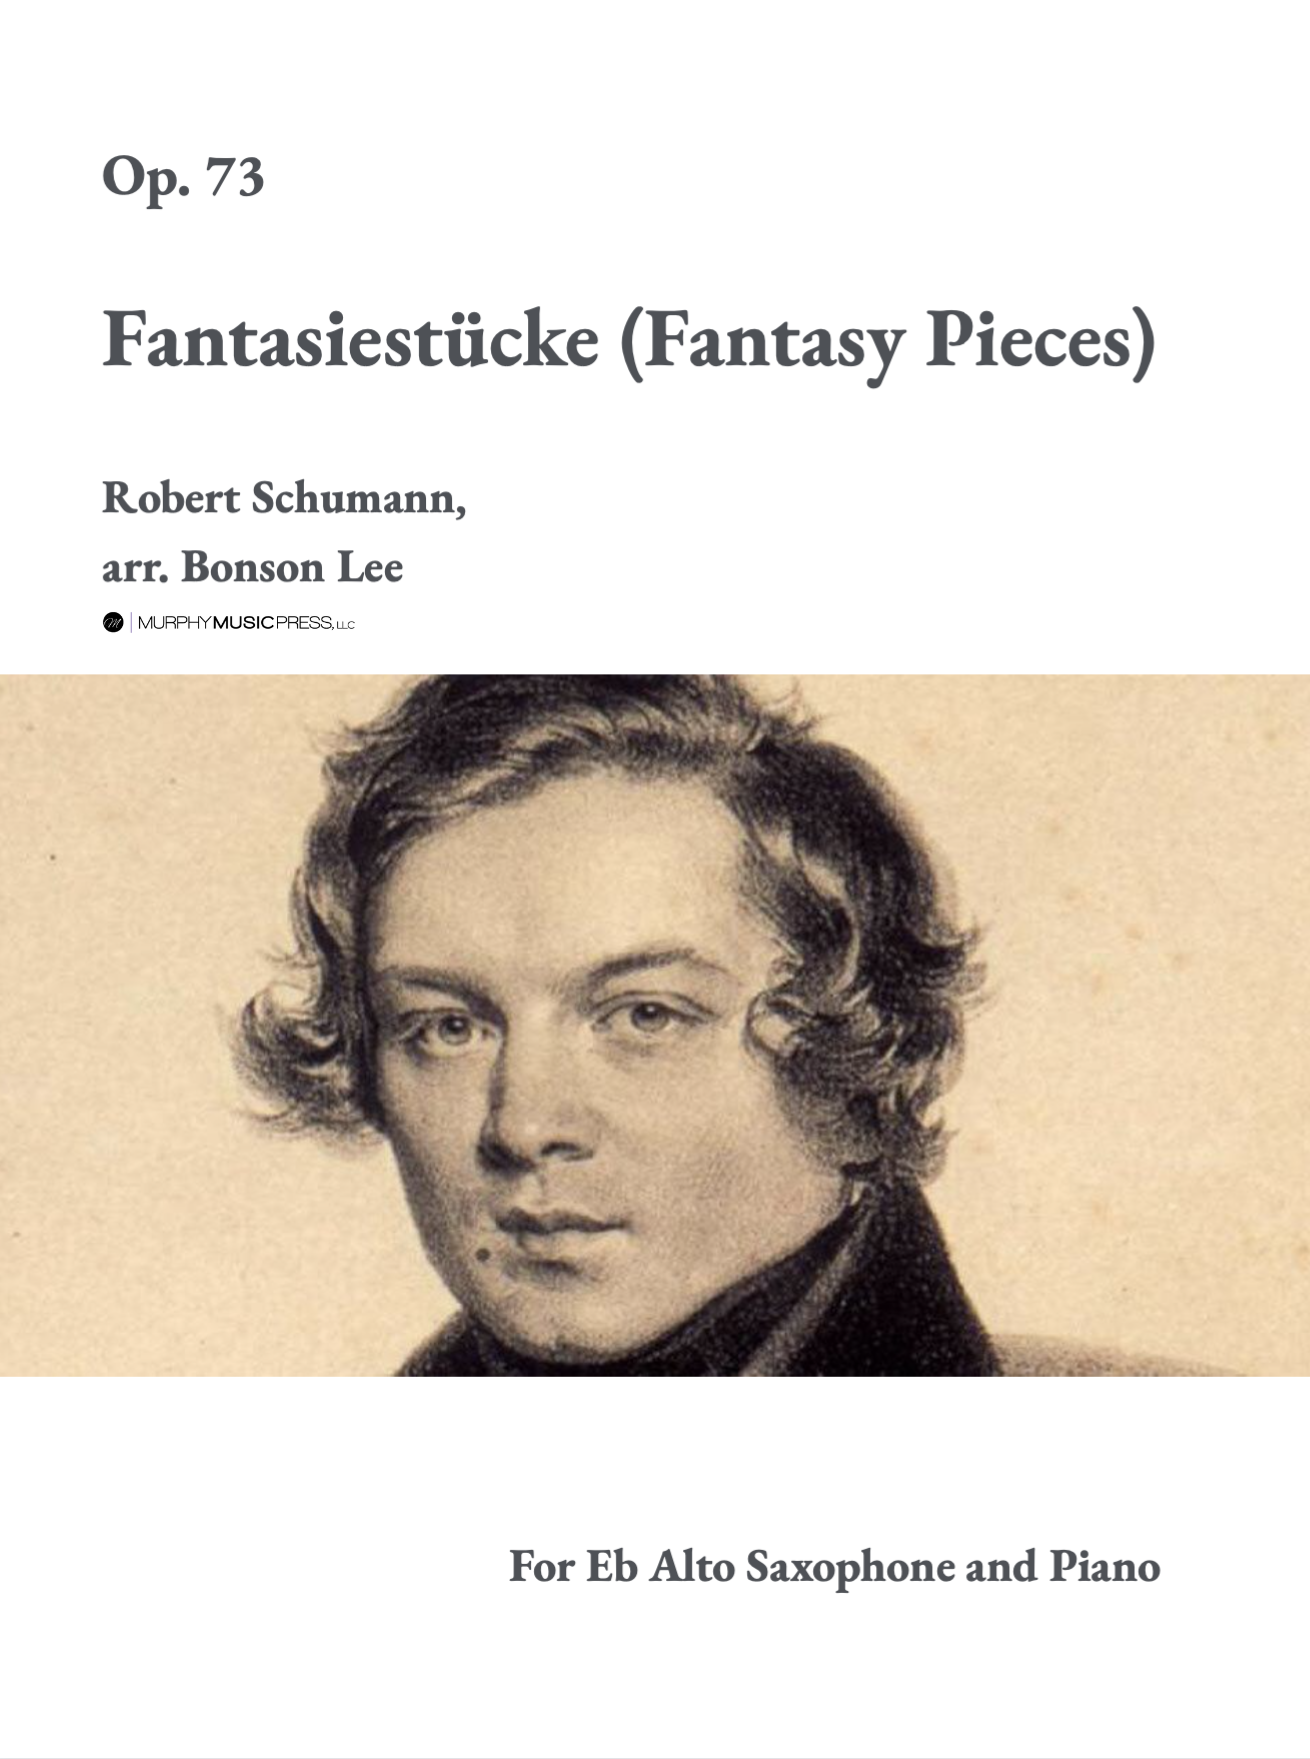 Fantasy Pieces by Schumann, arr. Bonson Lee